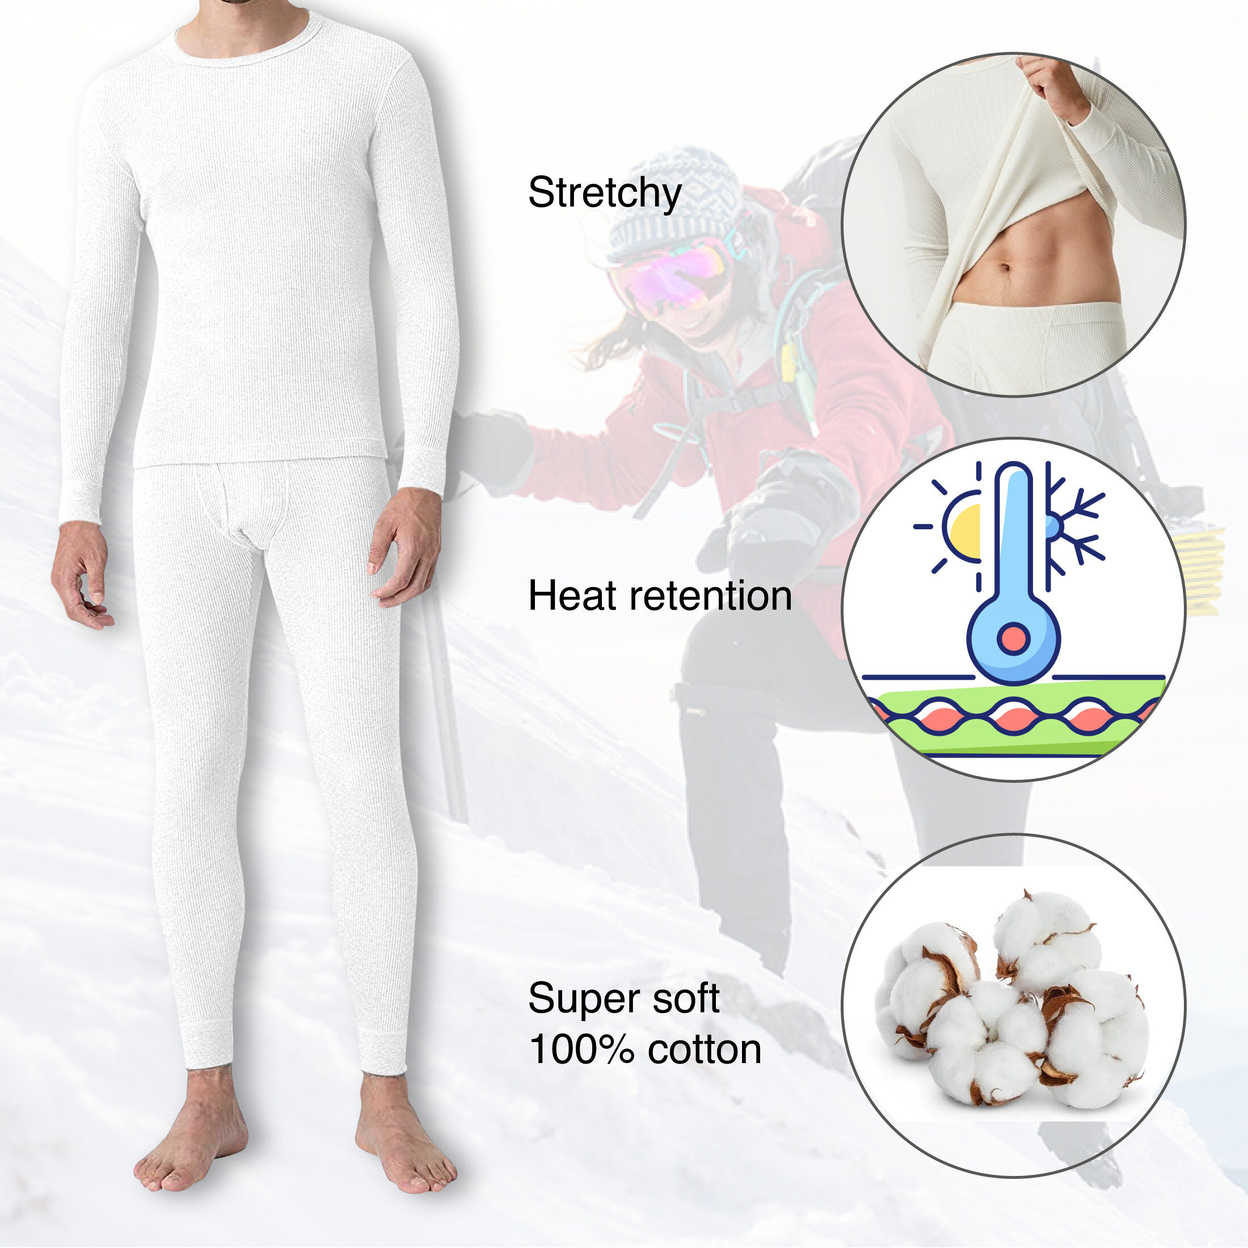 Multi-Set: Men's Super-Soft Cotton Waffle Knit Winter Thermal Underwear Set - 1-pack, X-large